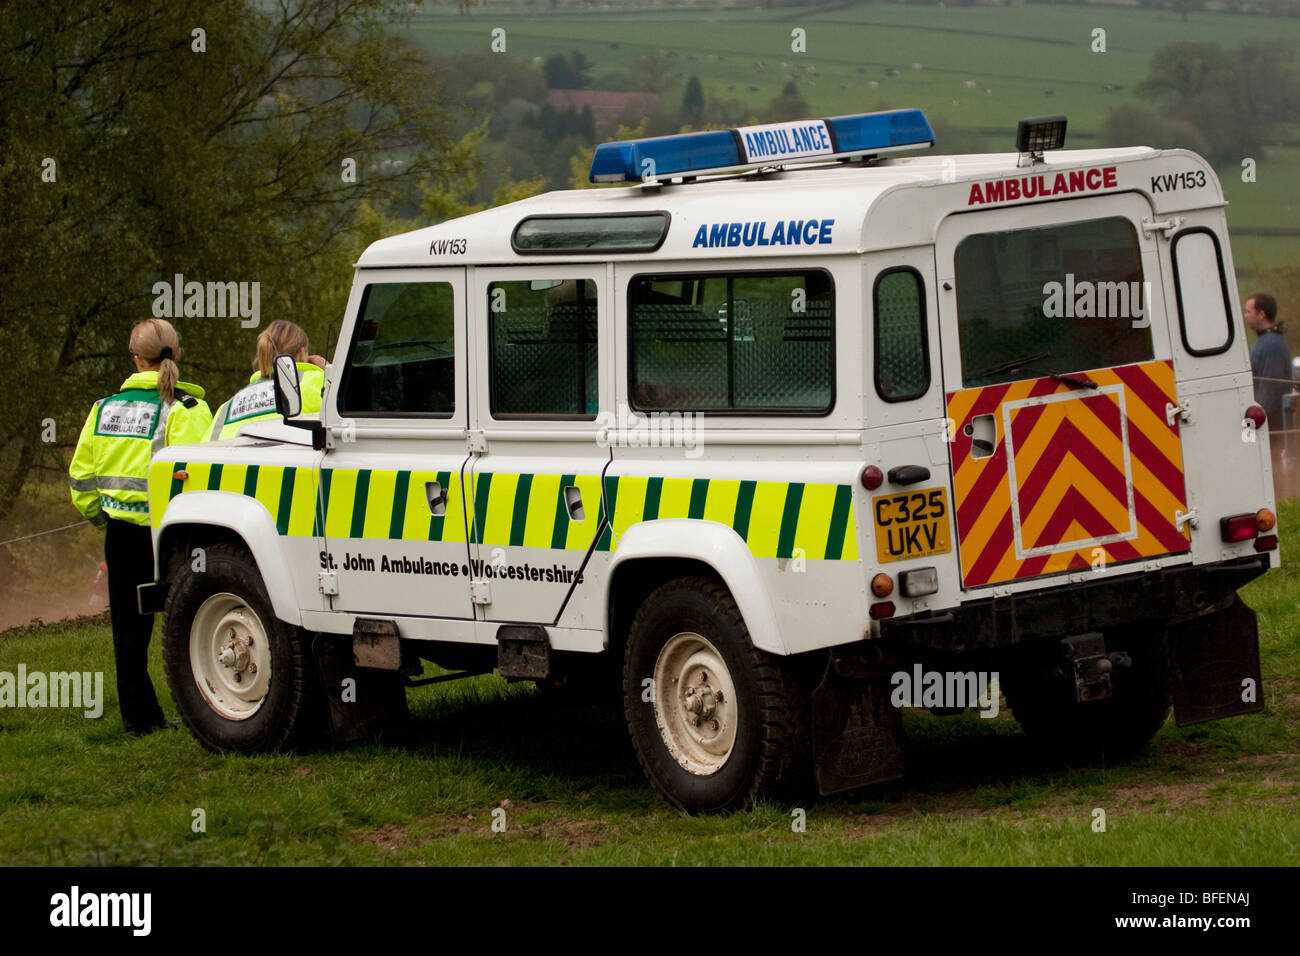 Landrover ambulance at motor sport event, England UK Stock Photo